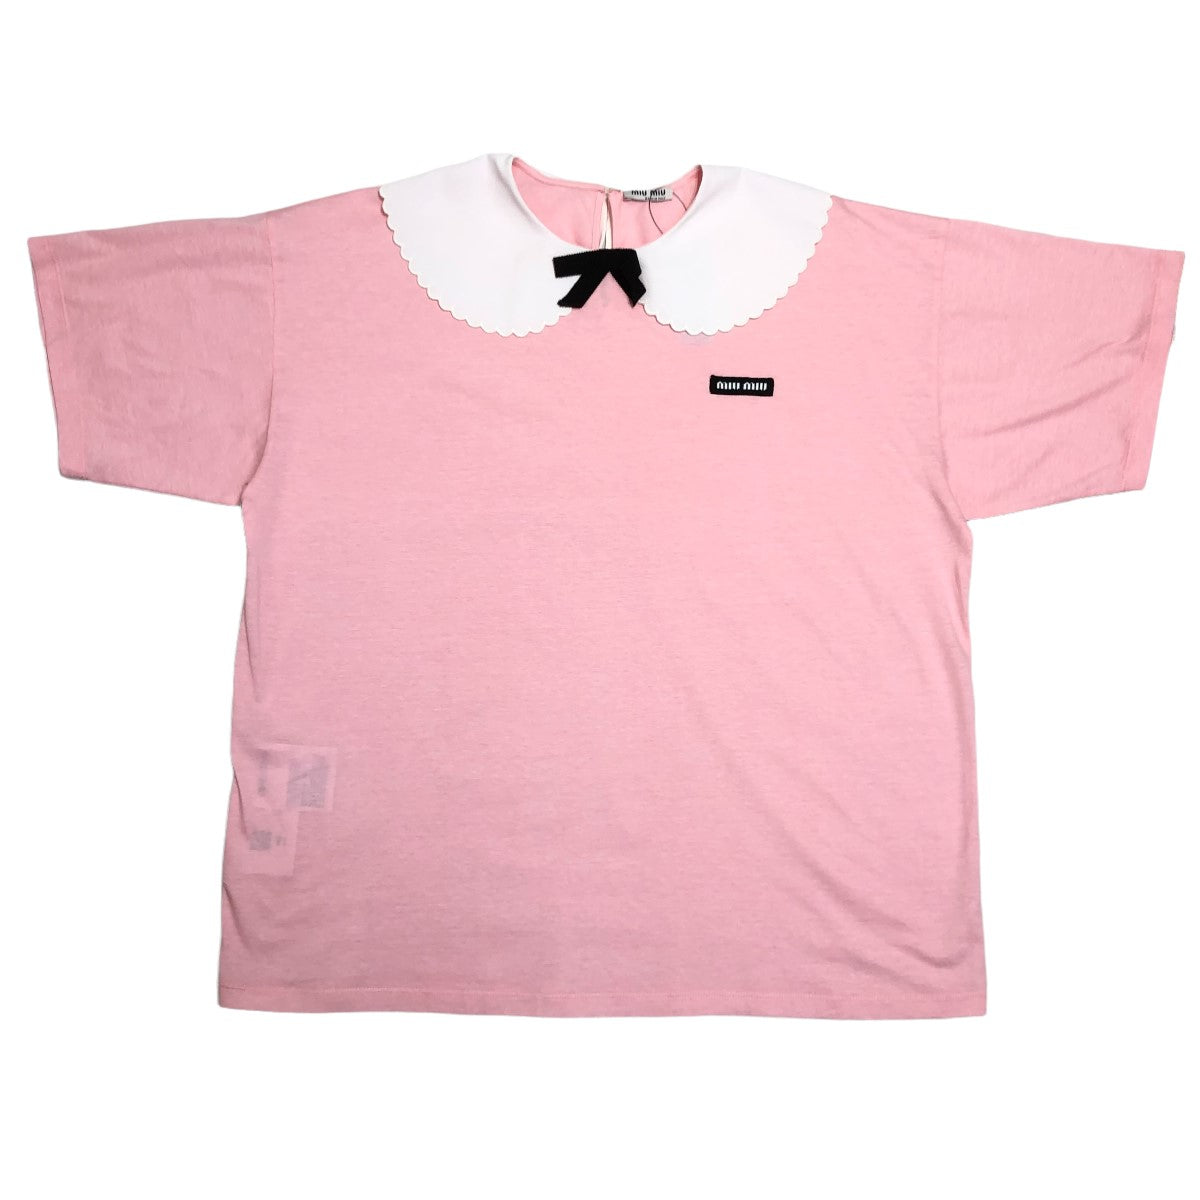 miu miu(ミュウミュウ) 20SS ジャージーTシャツ 襟装飾Tシャツ ピンク 